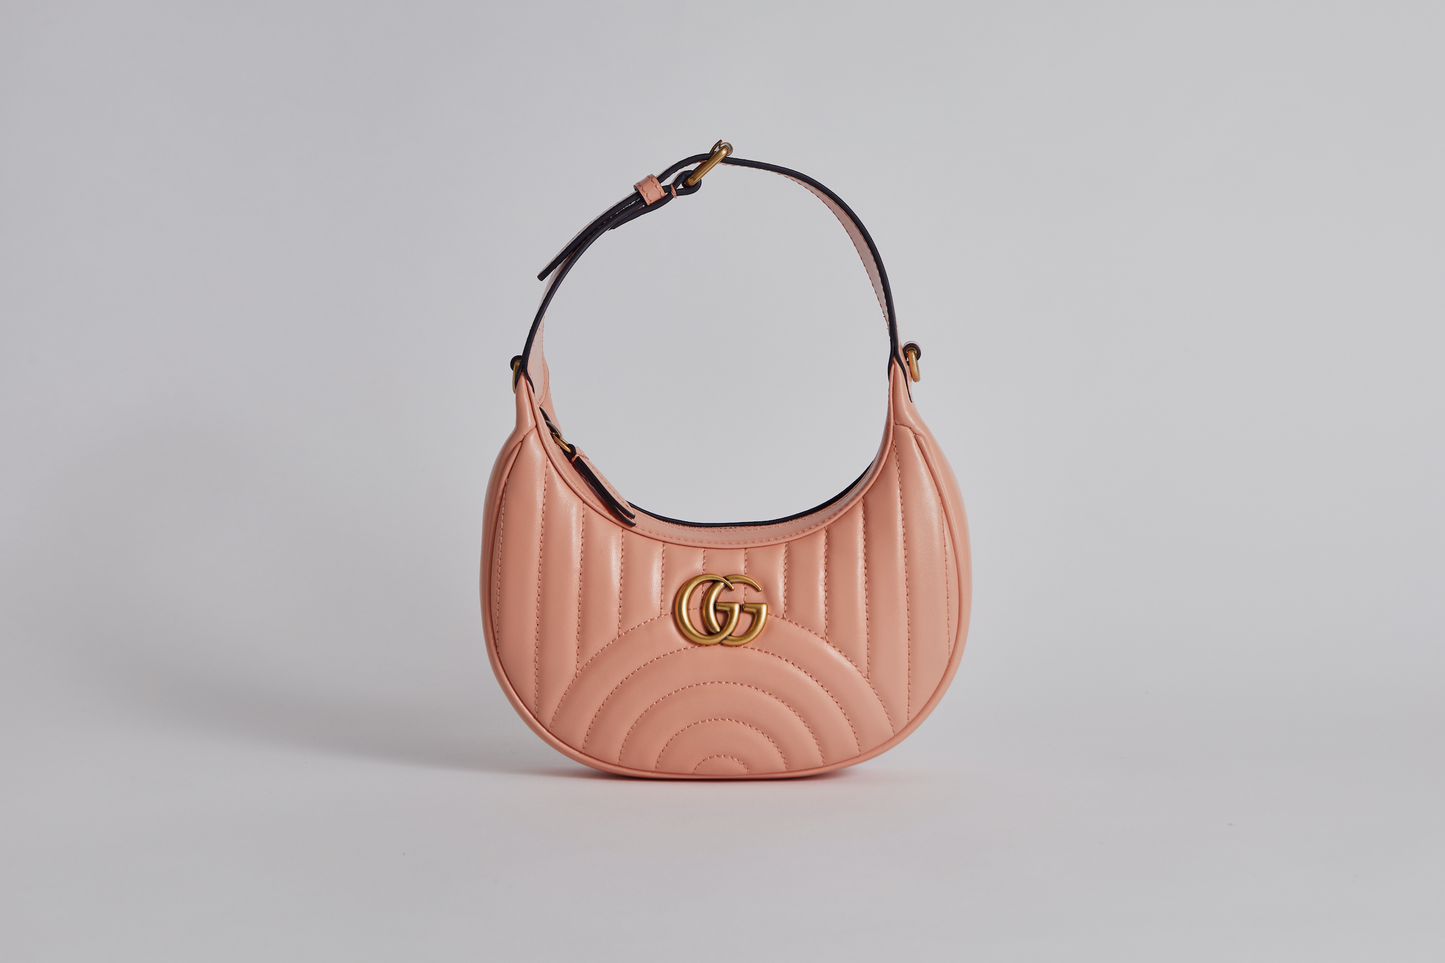 Gucci Marmont Half-Moon shaped bag - Peach